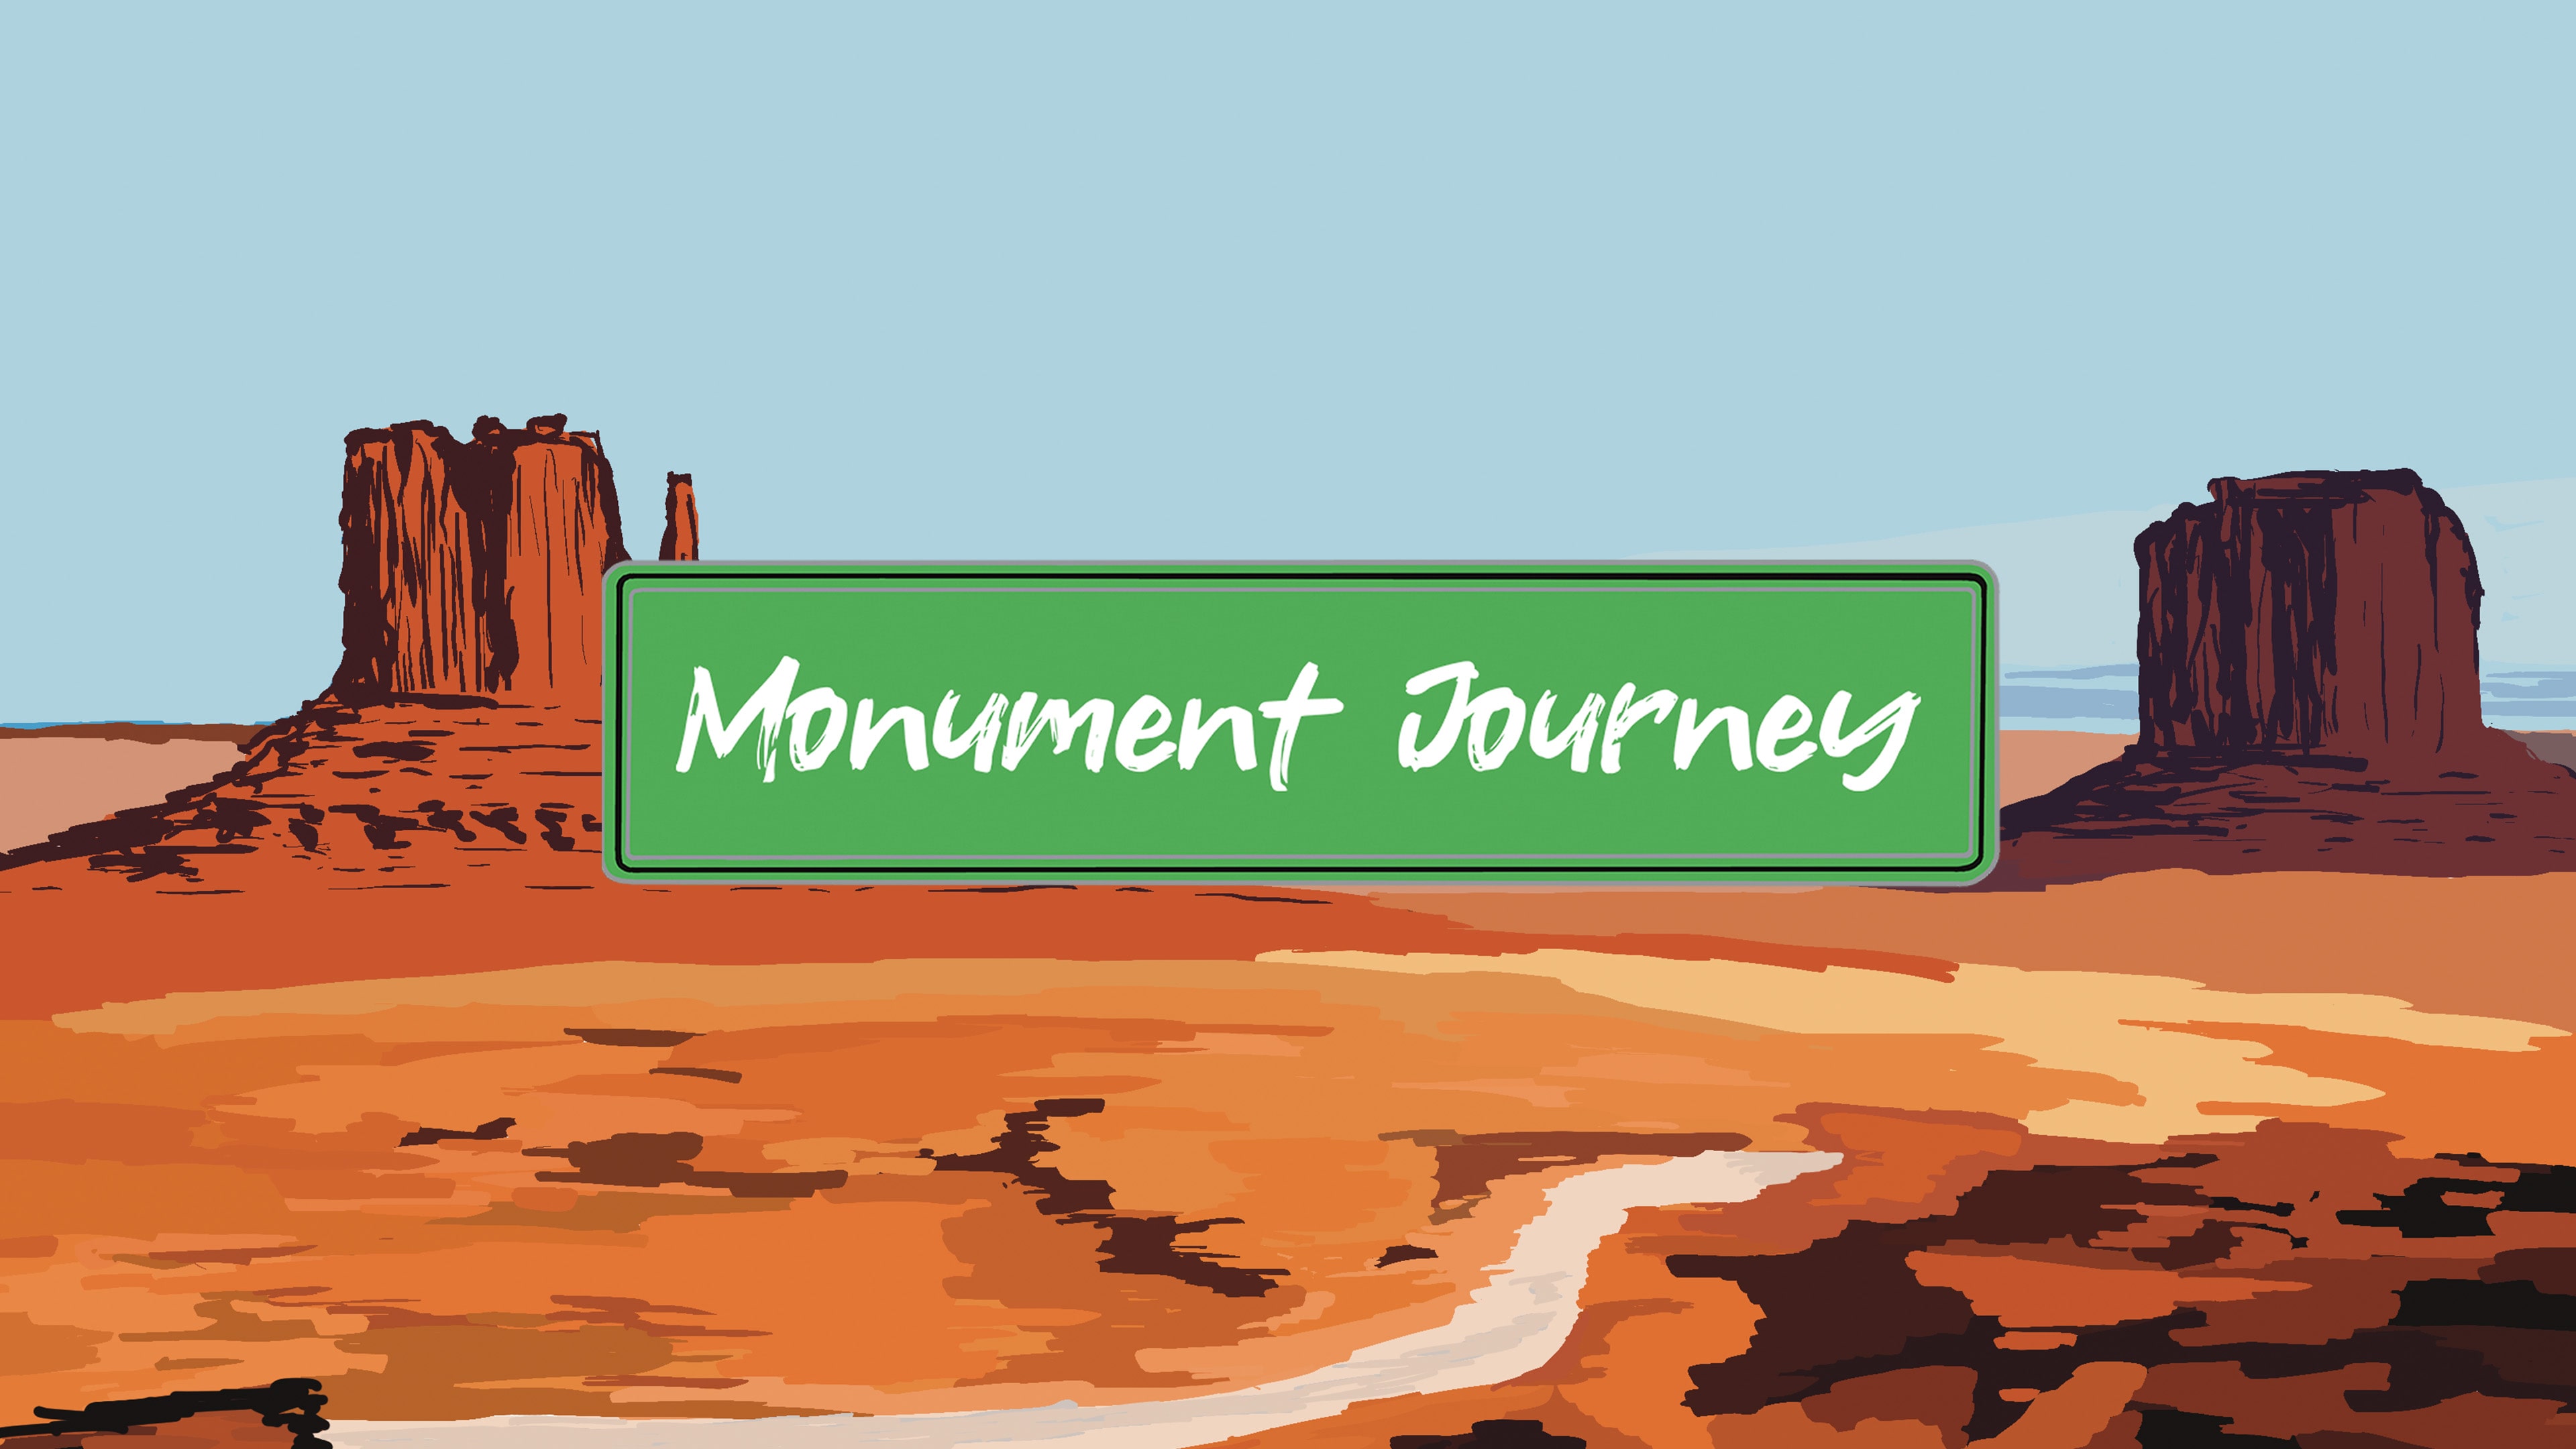 Monument Journey (英文)